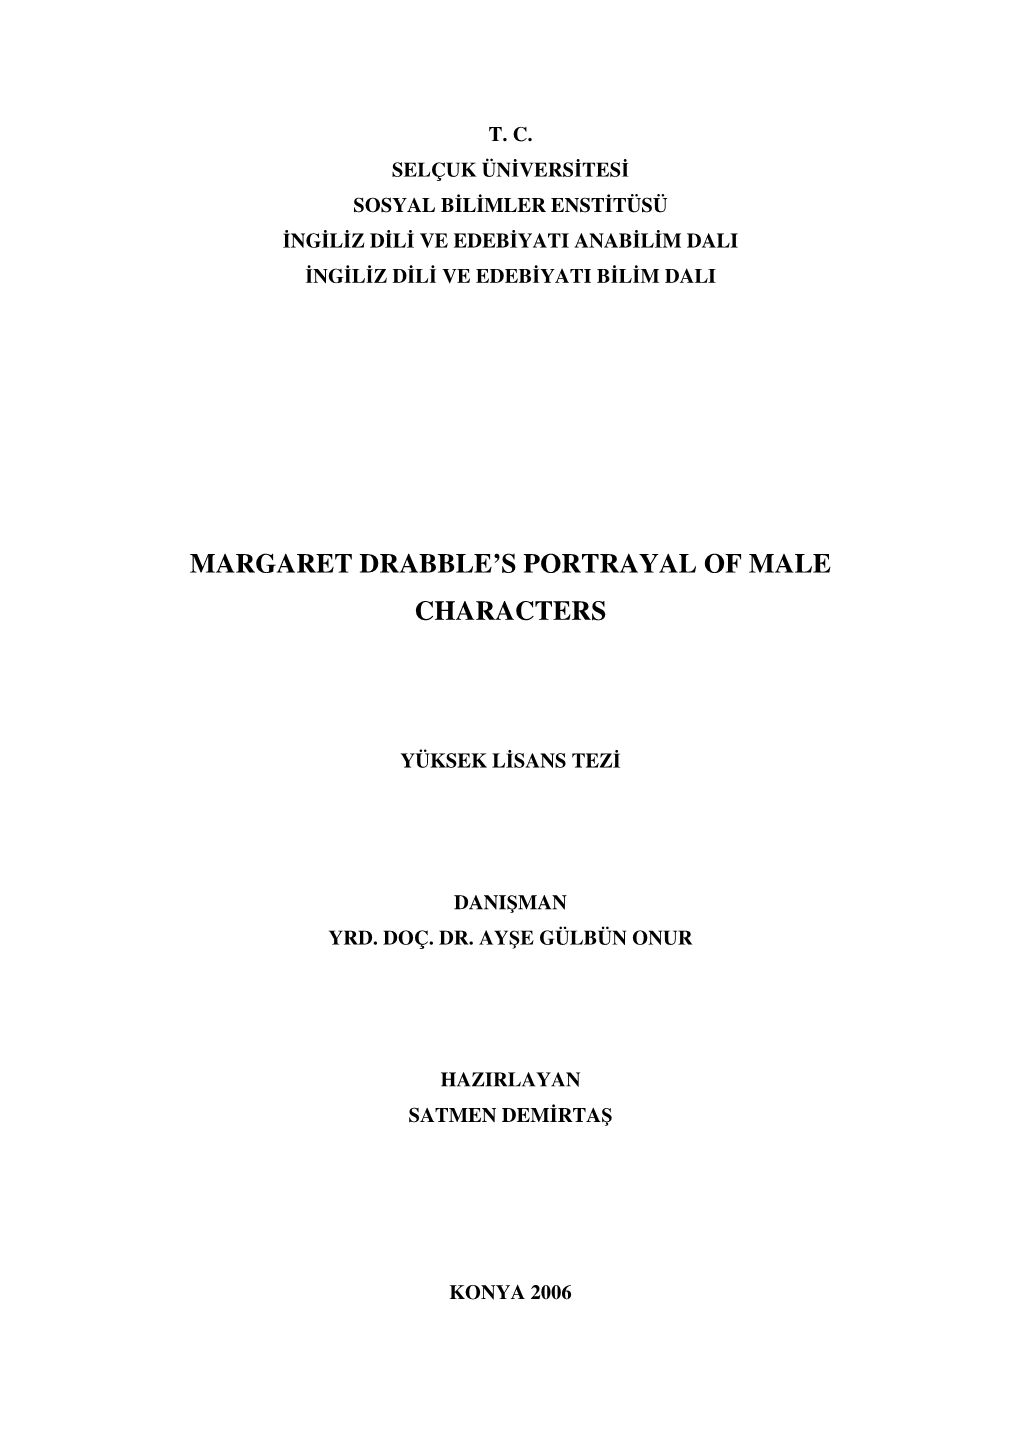 Margaret Drabble's Portrayal of Male